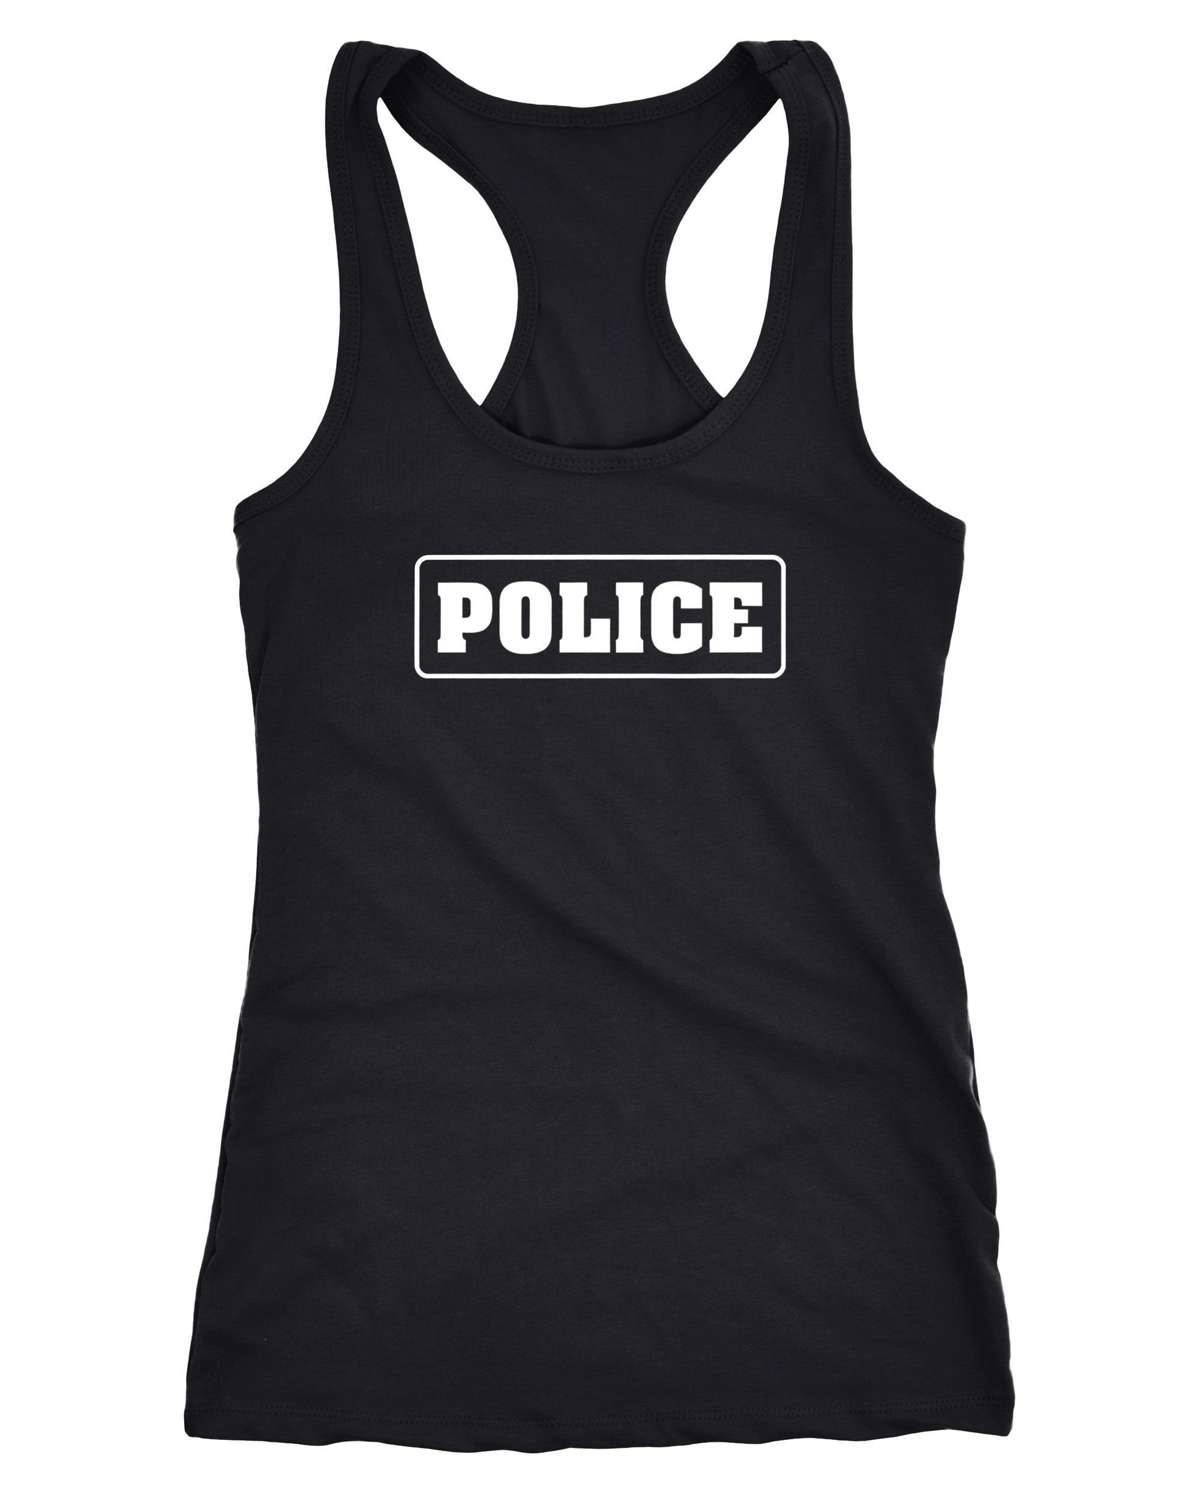 Майка женская безрукавка полицейский полицейский костюм женщина-полицейский забавная рубашка карнавальный Racerback ®